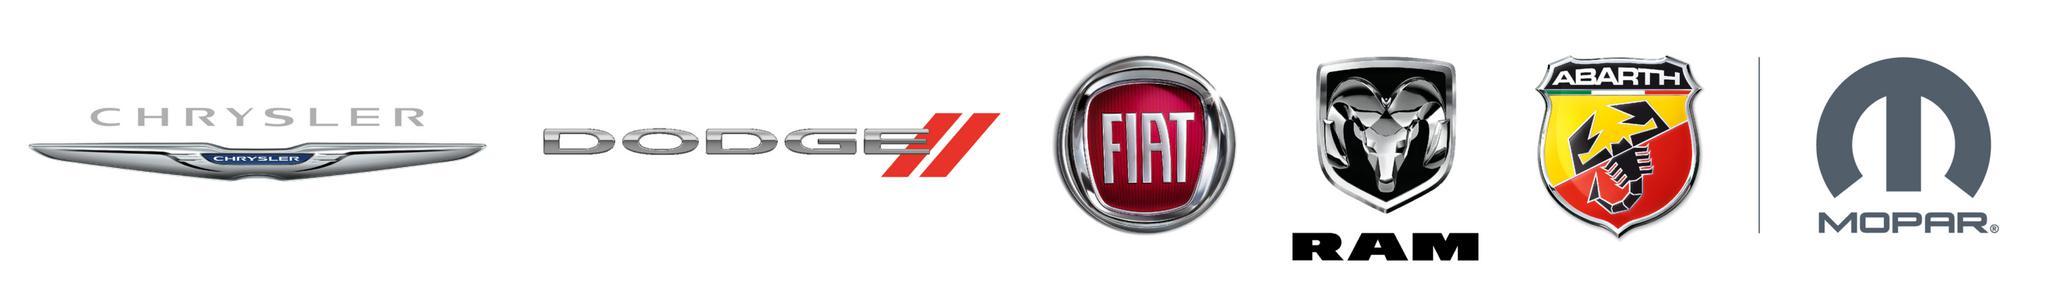 Fiat-Chrysler Logo - Fiat Chrysler Automobiles - Dubai International Motor Show 2019 ...